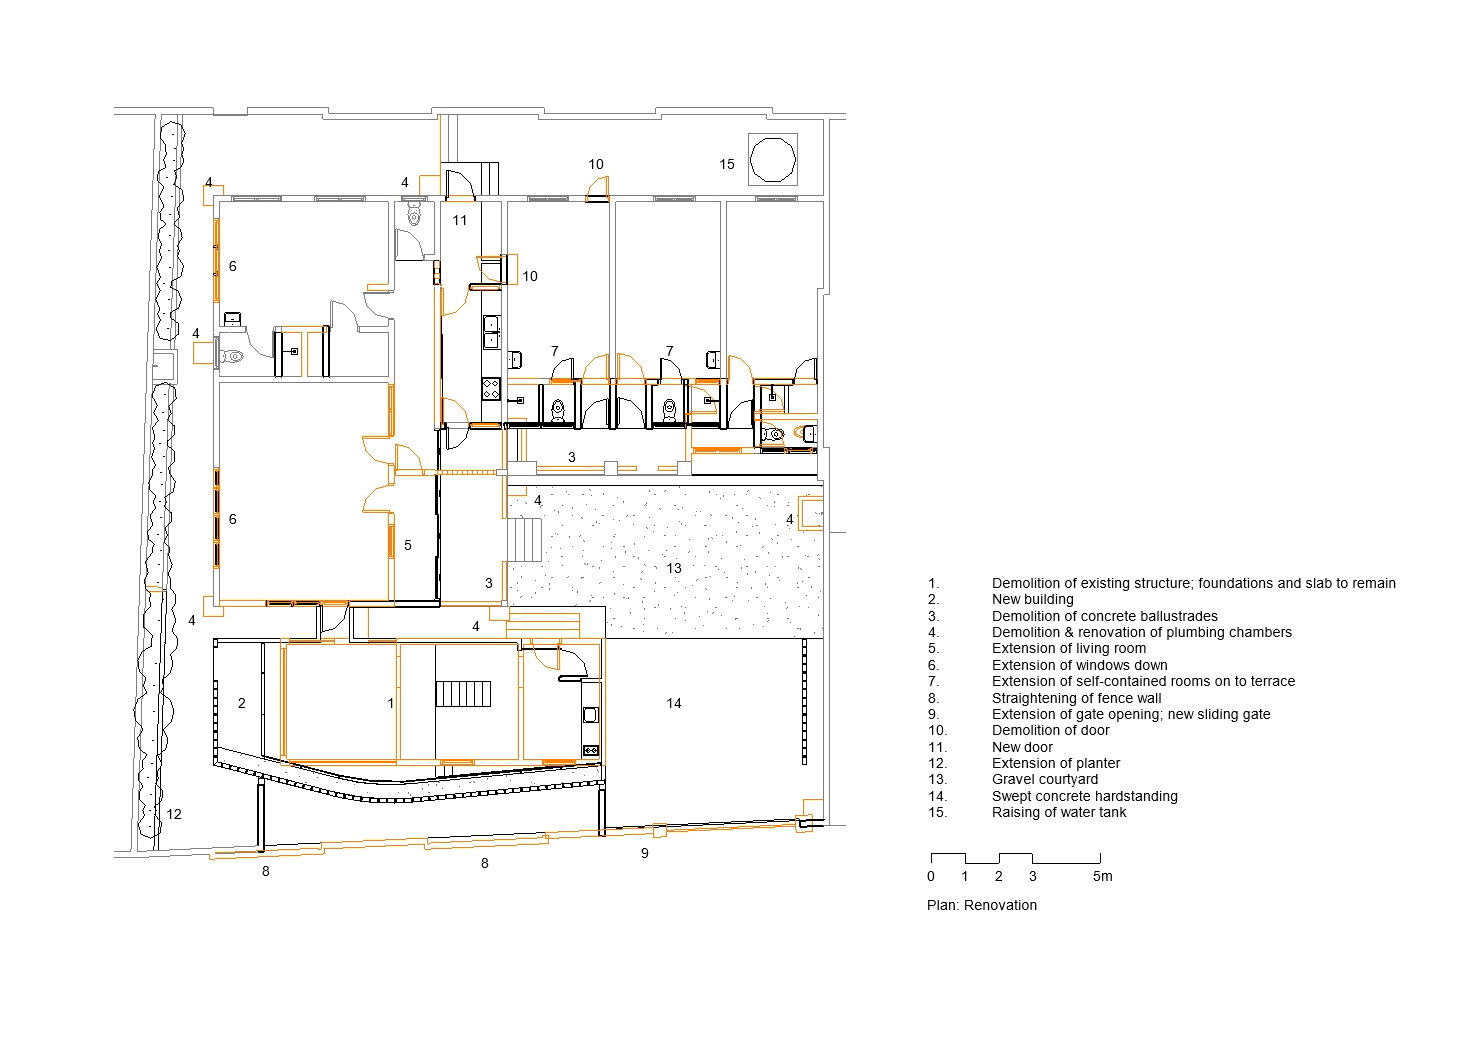 2020-07-15 - P - Sheet - A-CD-101 - Ground Floor Plan - New & Demolition_cropped.jpg